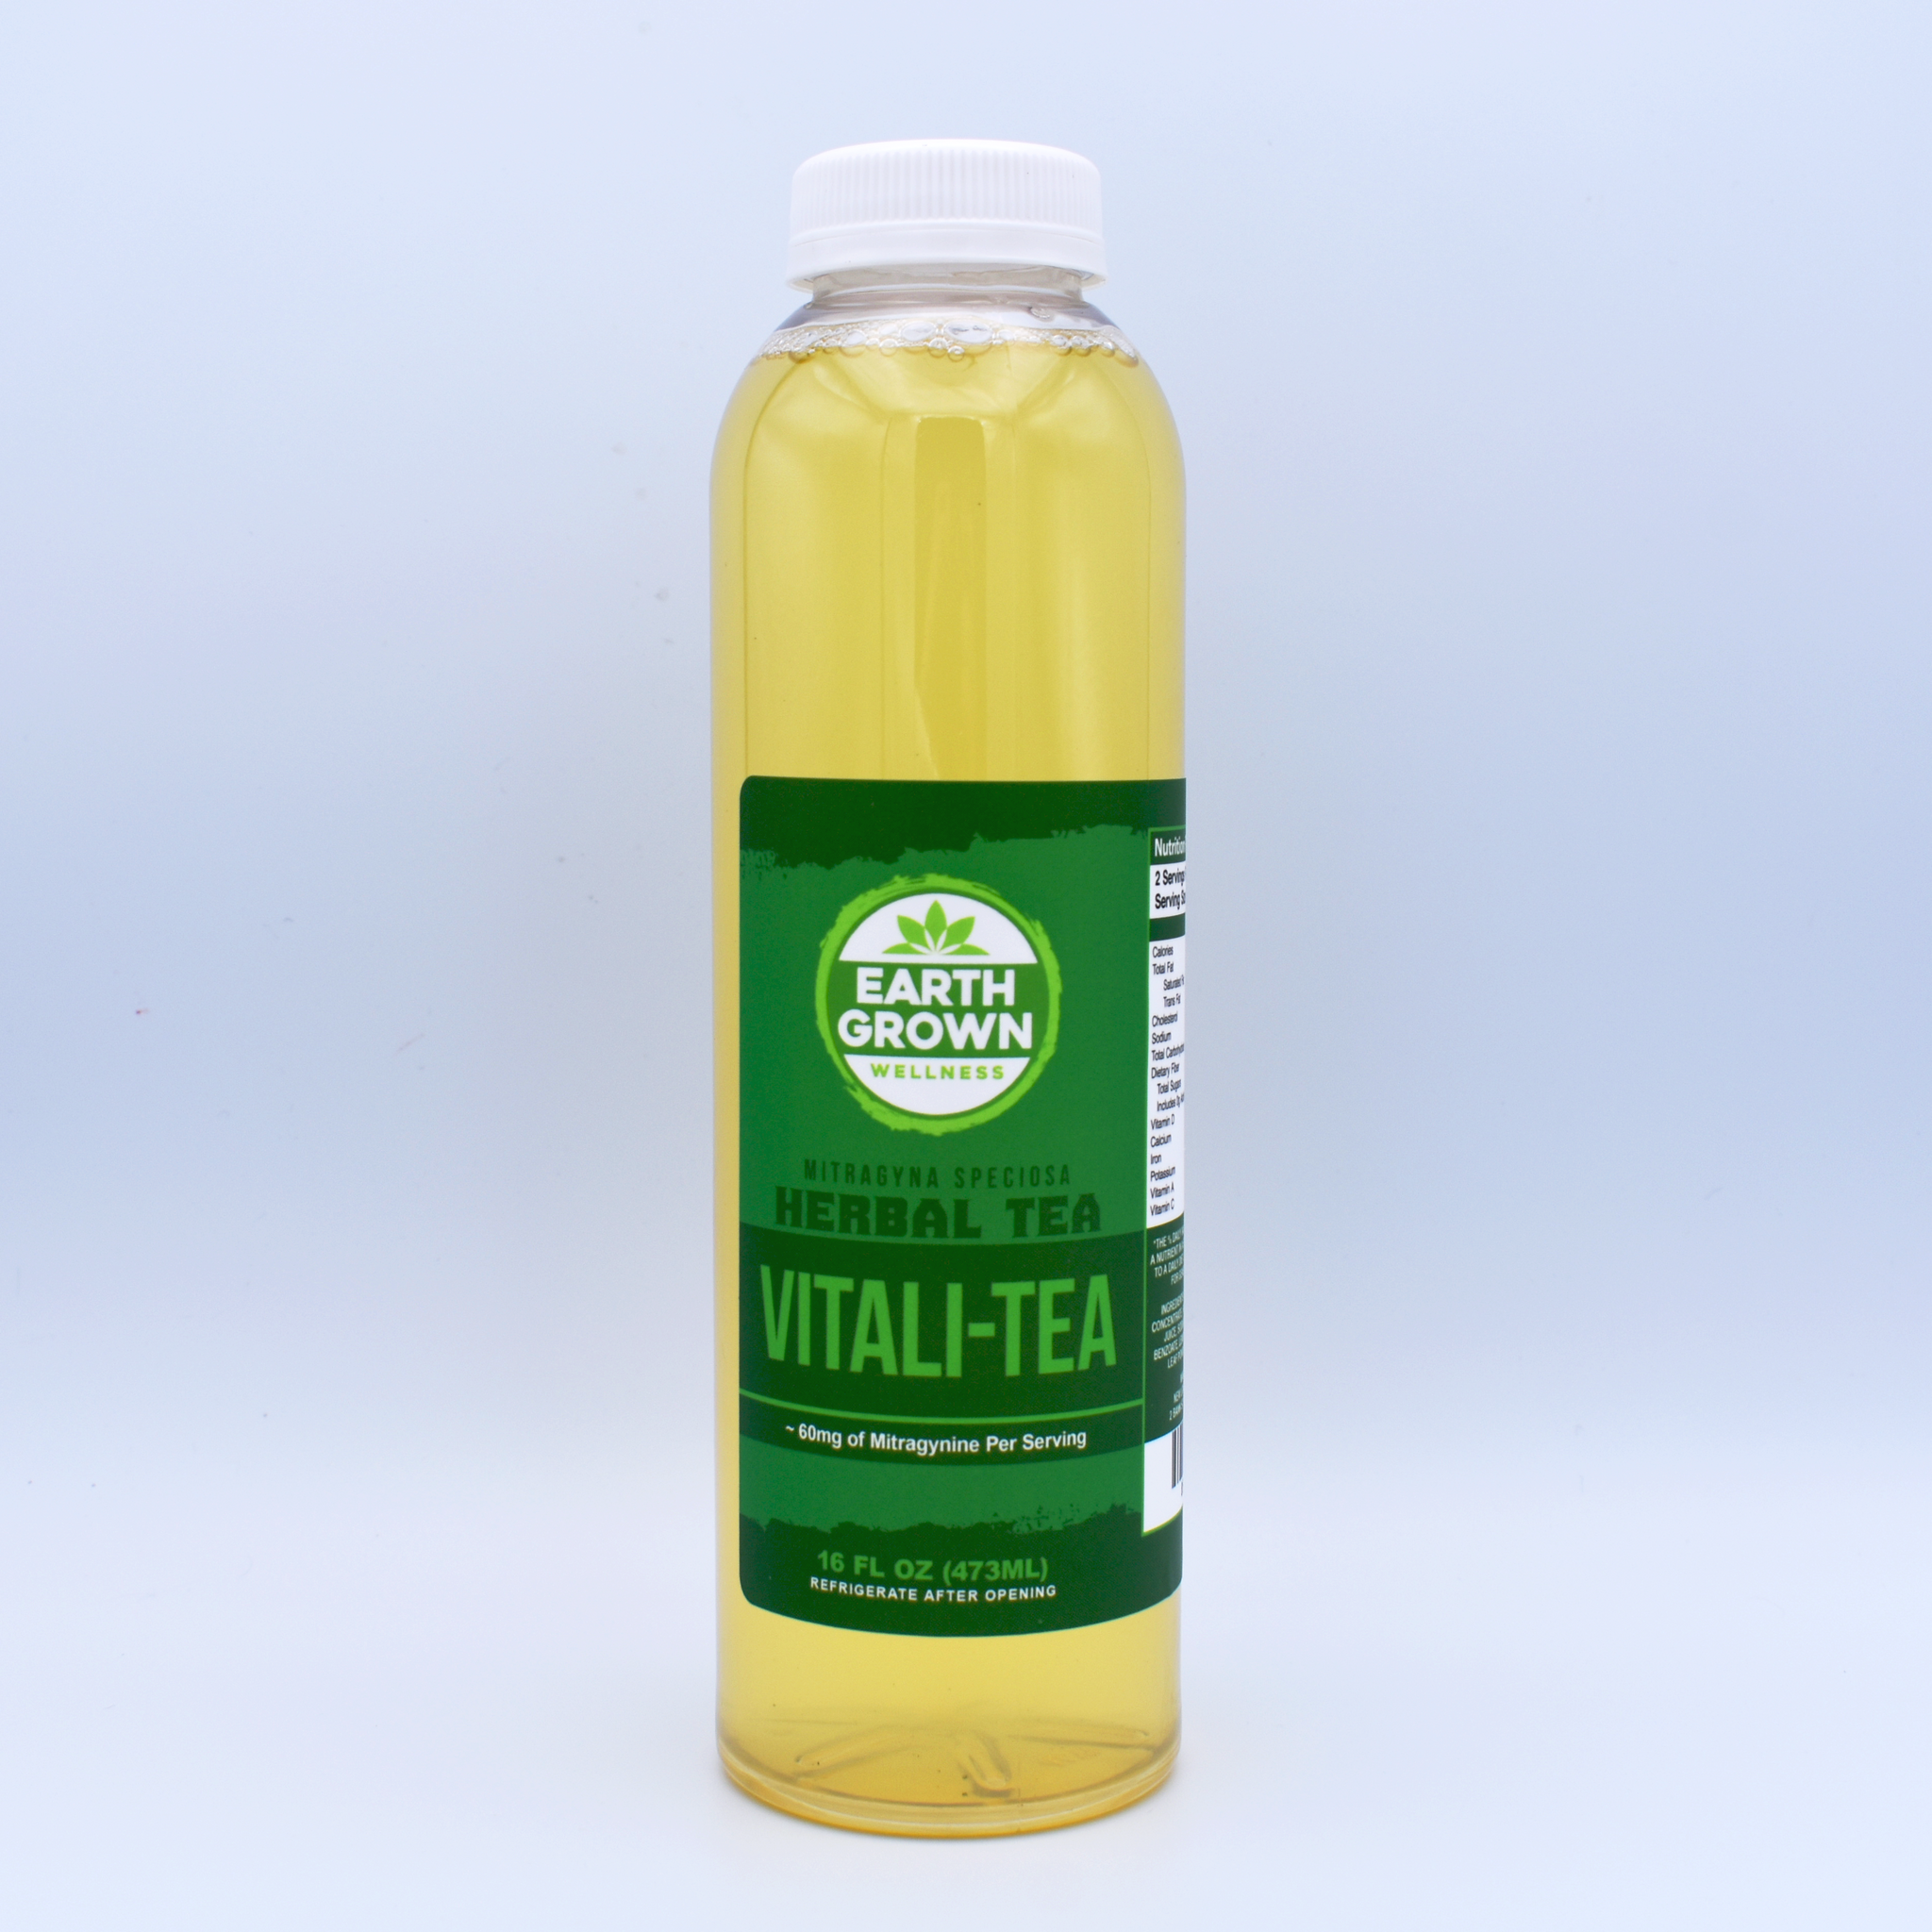 A bottle of Earth Grown Wellness brand Kratom Vitali-Tea sits on a white background. Green label.